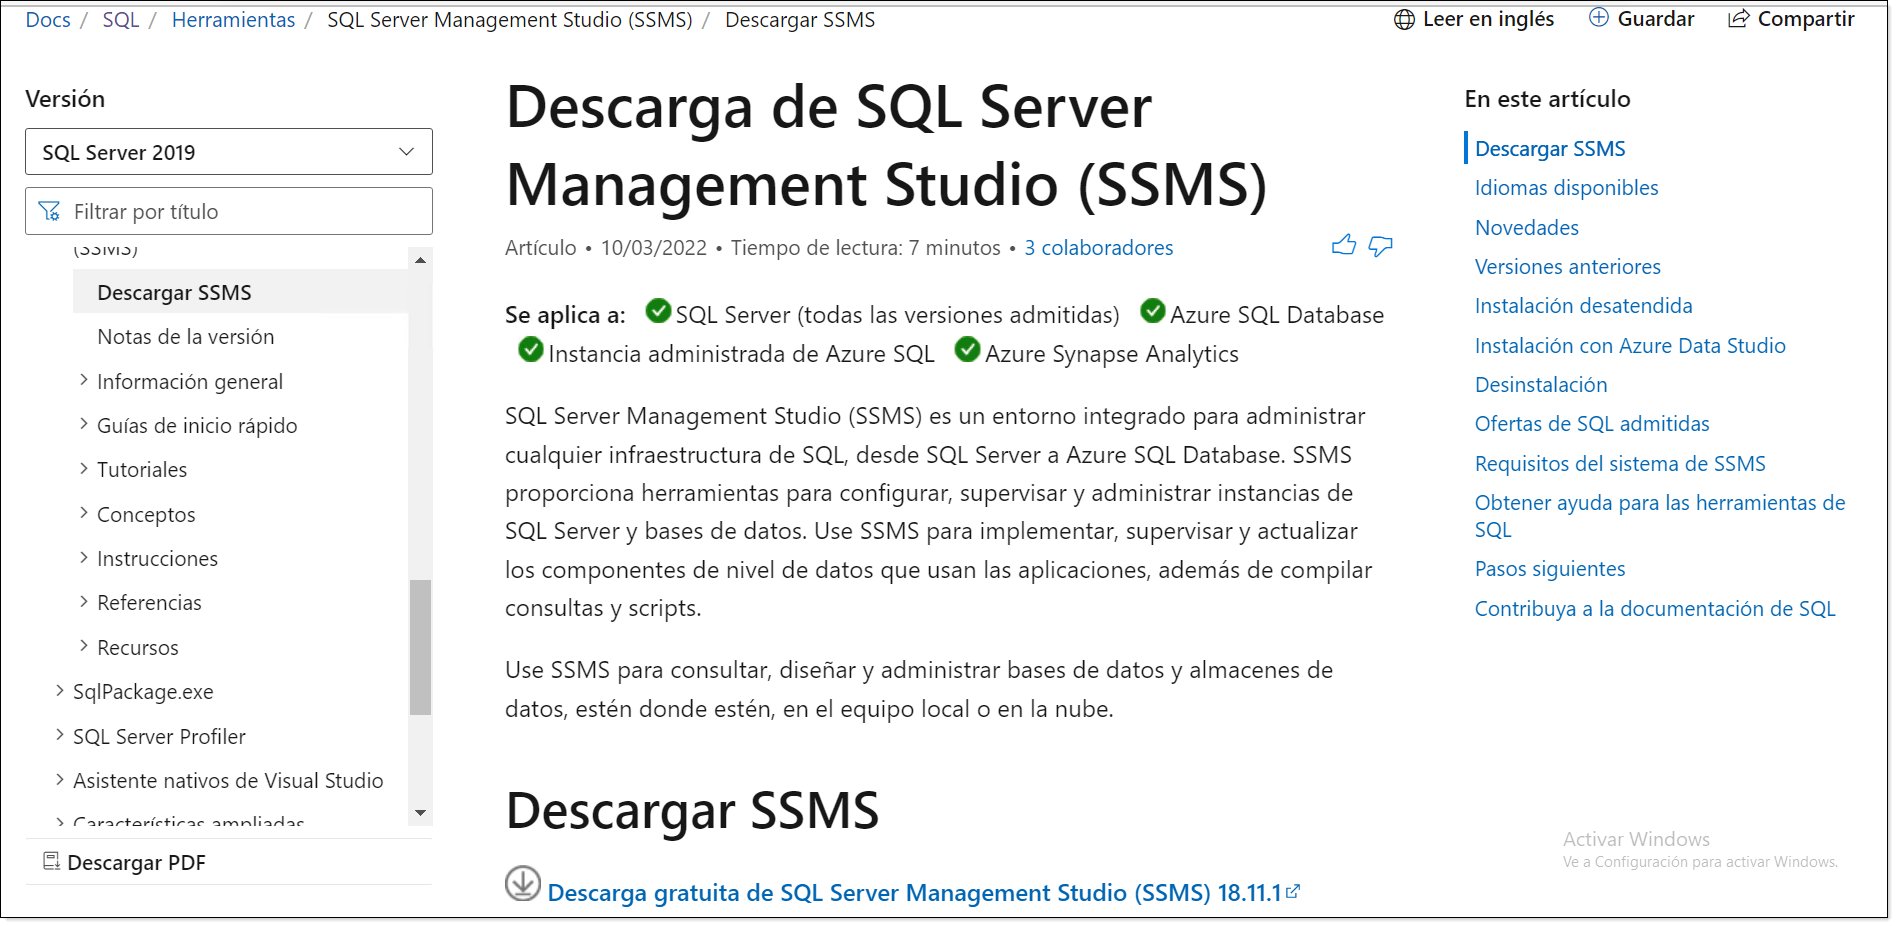 Part 1 - Download SSMS